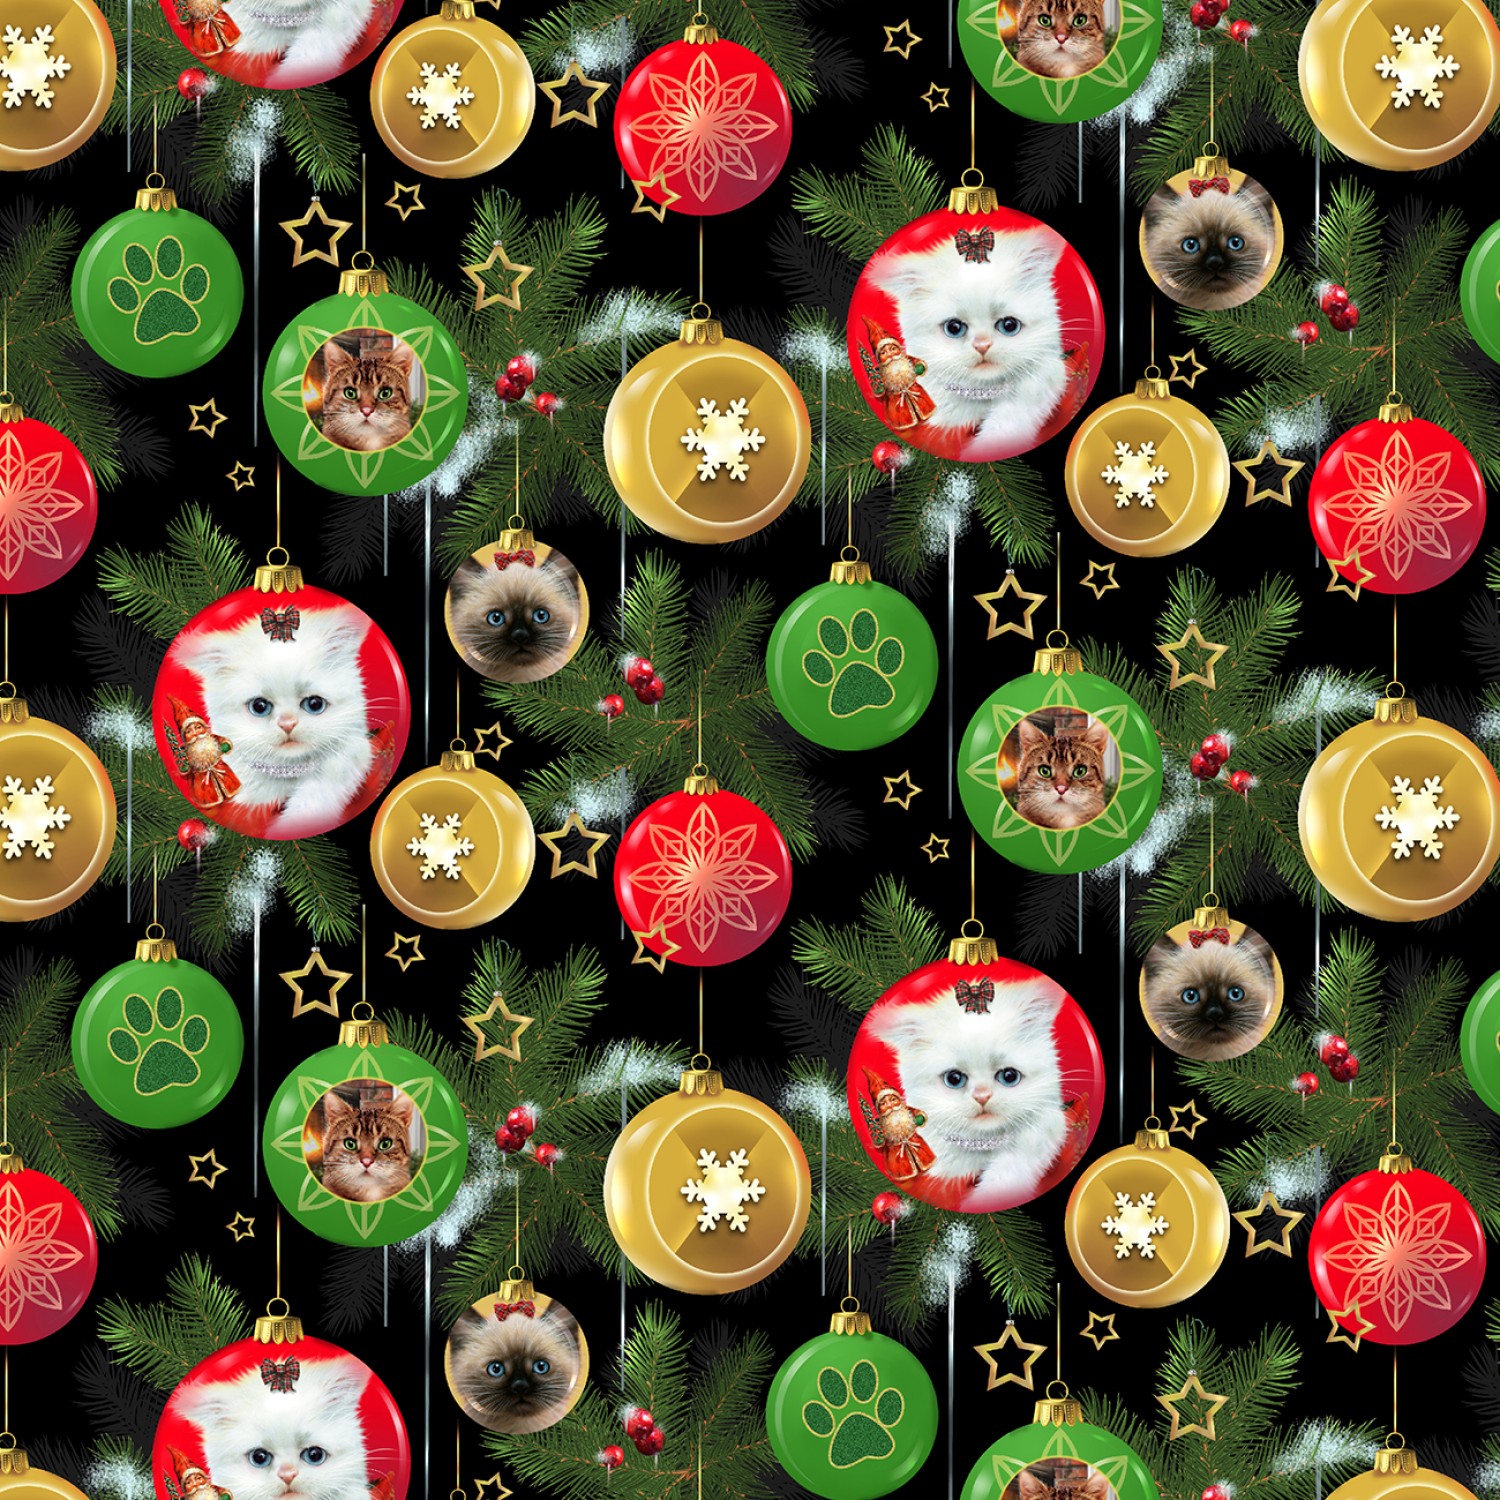 Fireside Kittens Ornaments Christmas Fabric